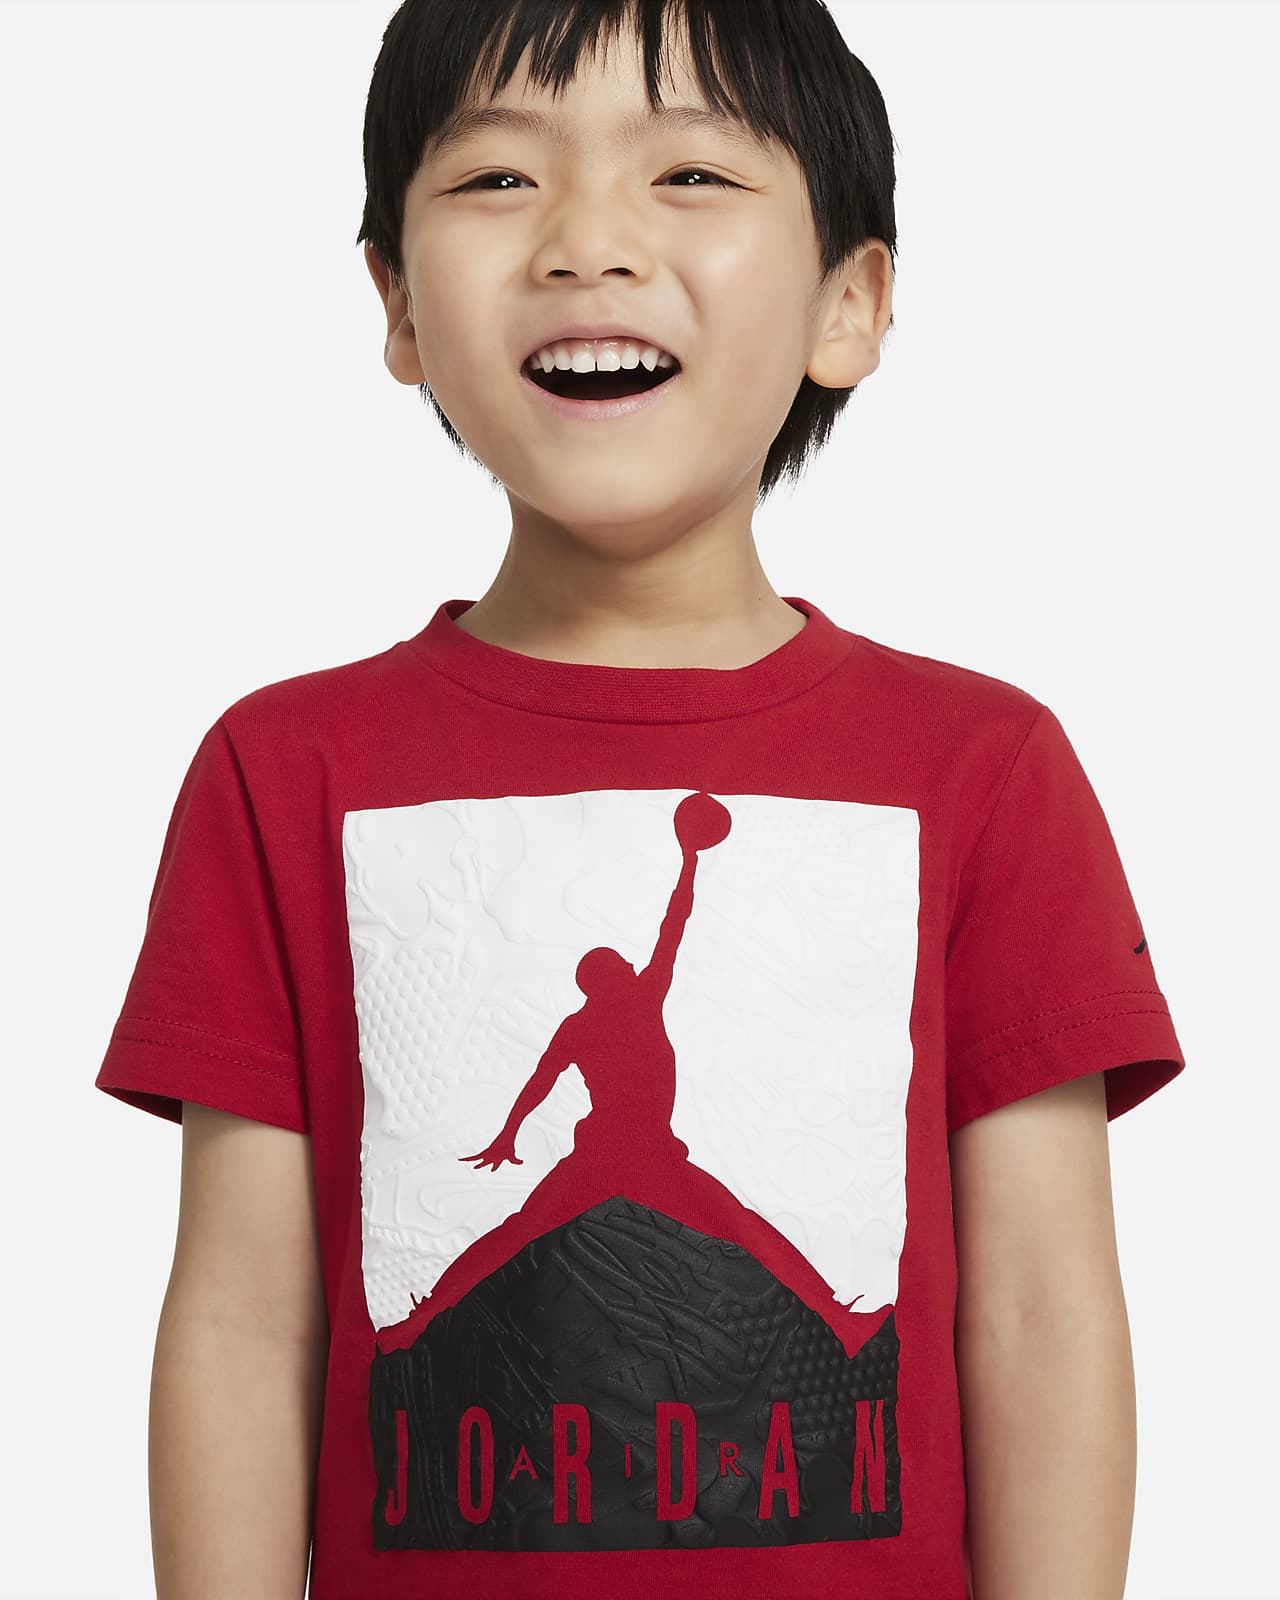 michael jordan shirts for boys